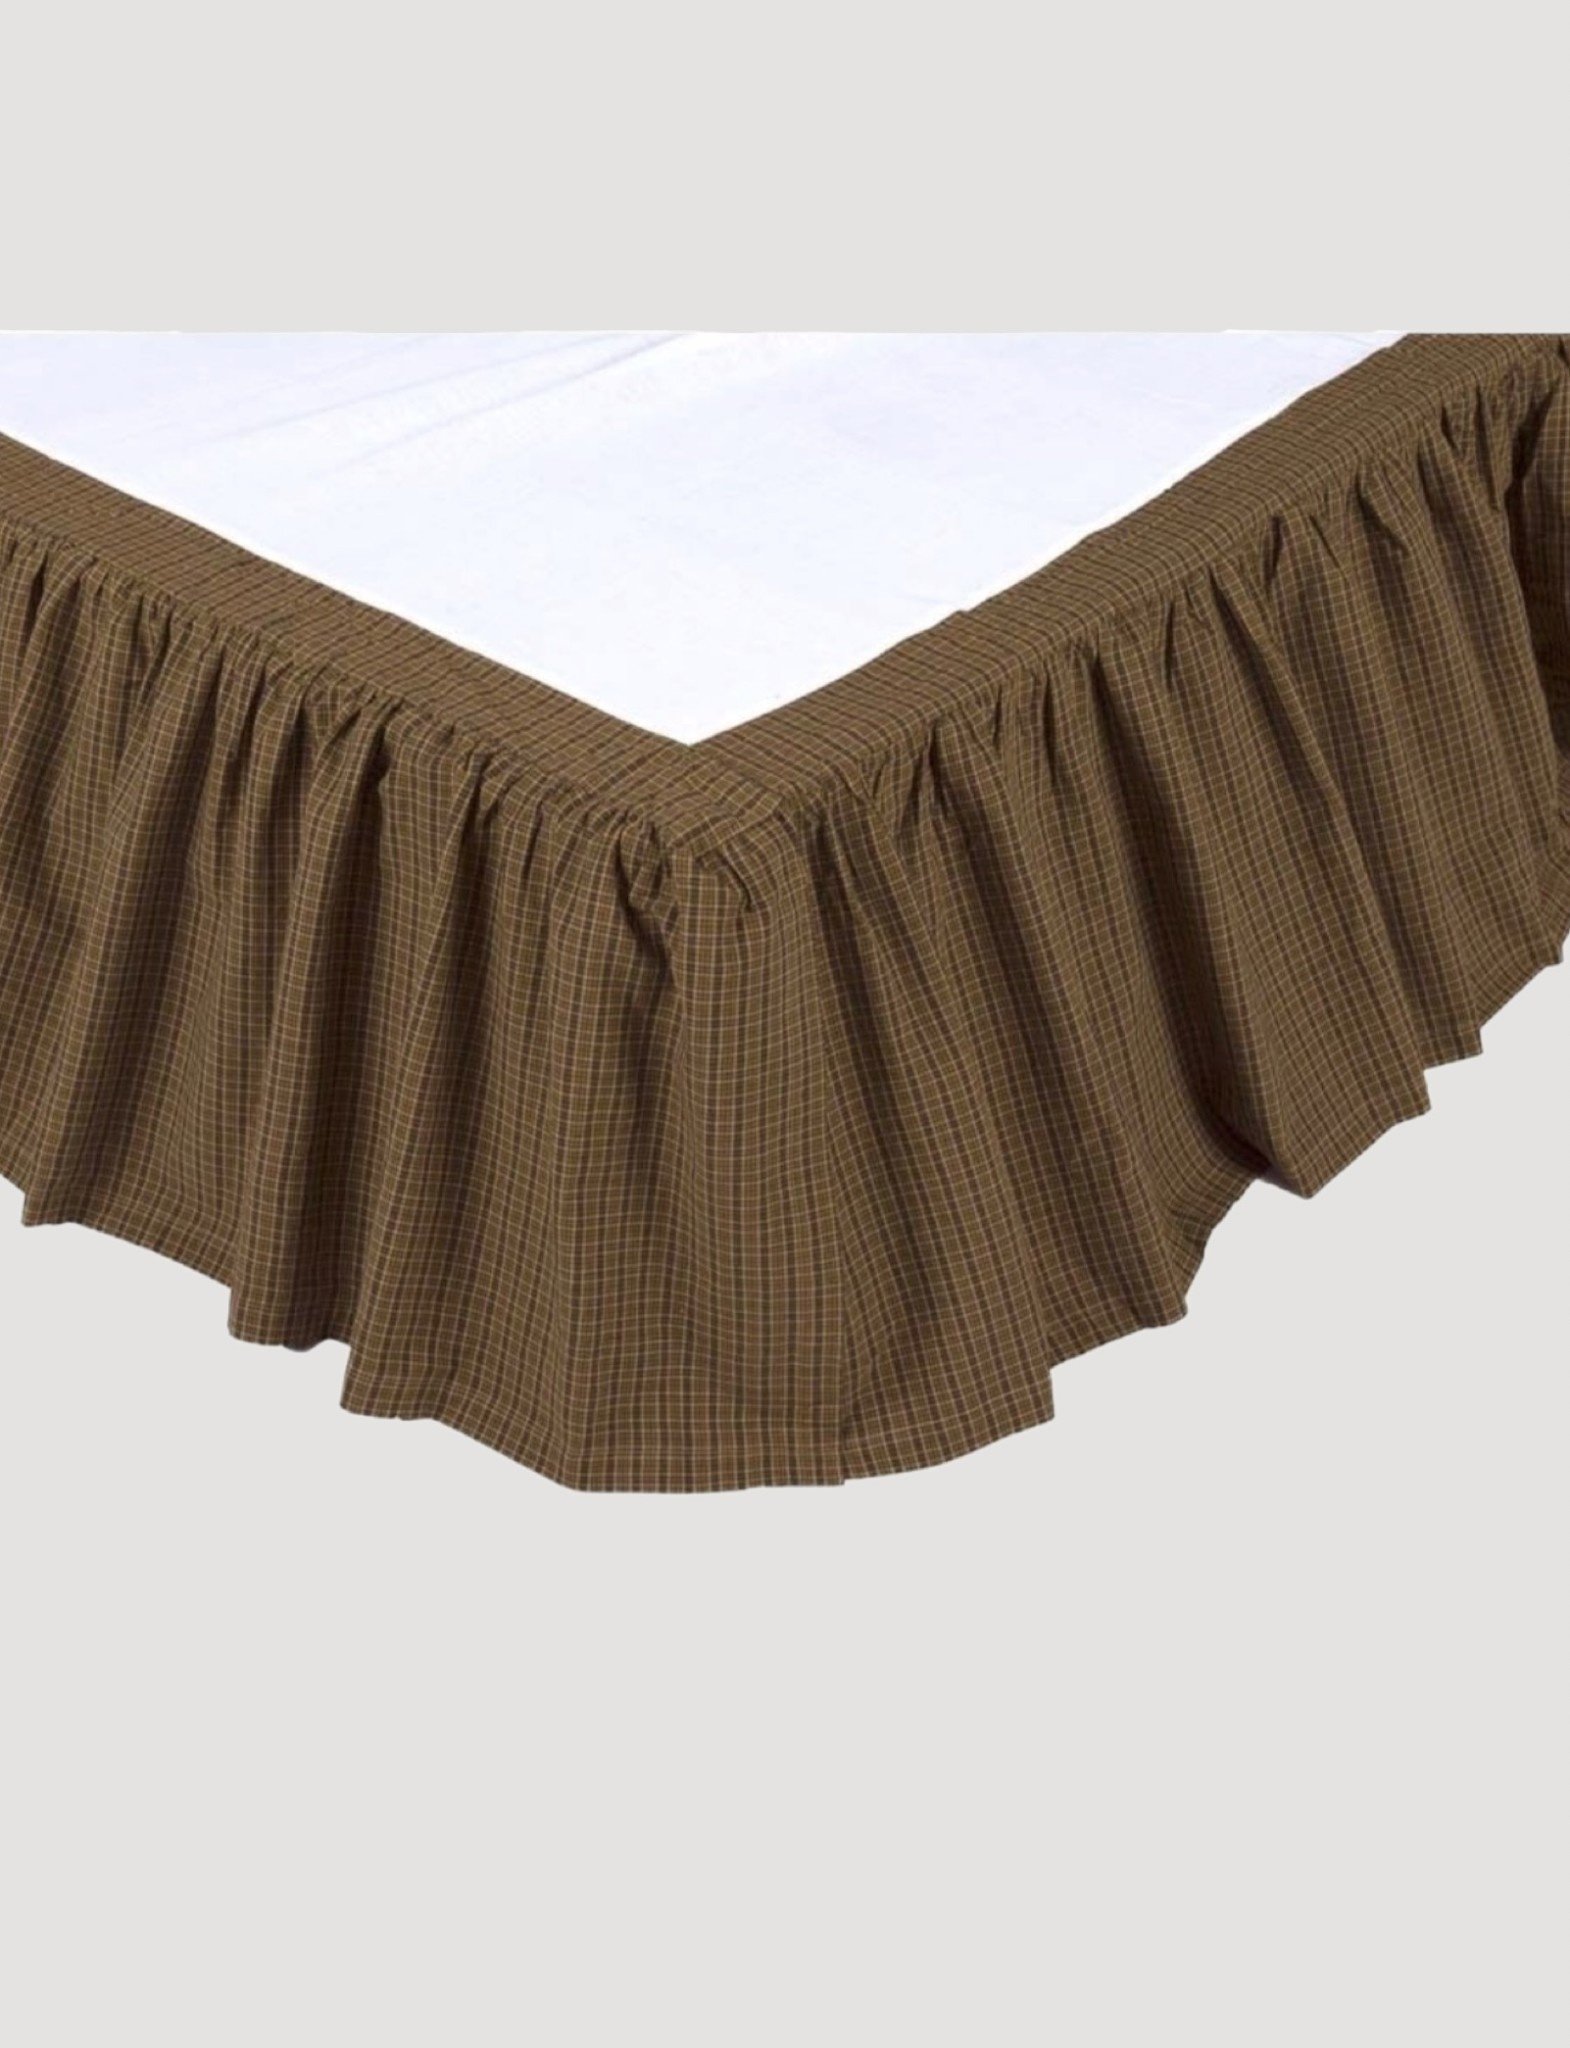 SOLID KHAKI QUEEN Bedskirt Dust Ruffle Rustic Primitive Tan Tea Stain Bed Skirt 